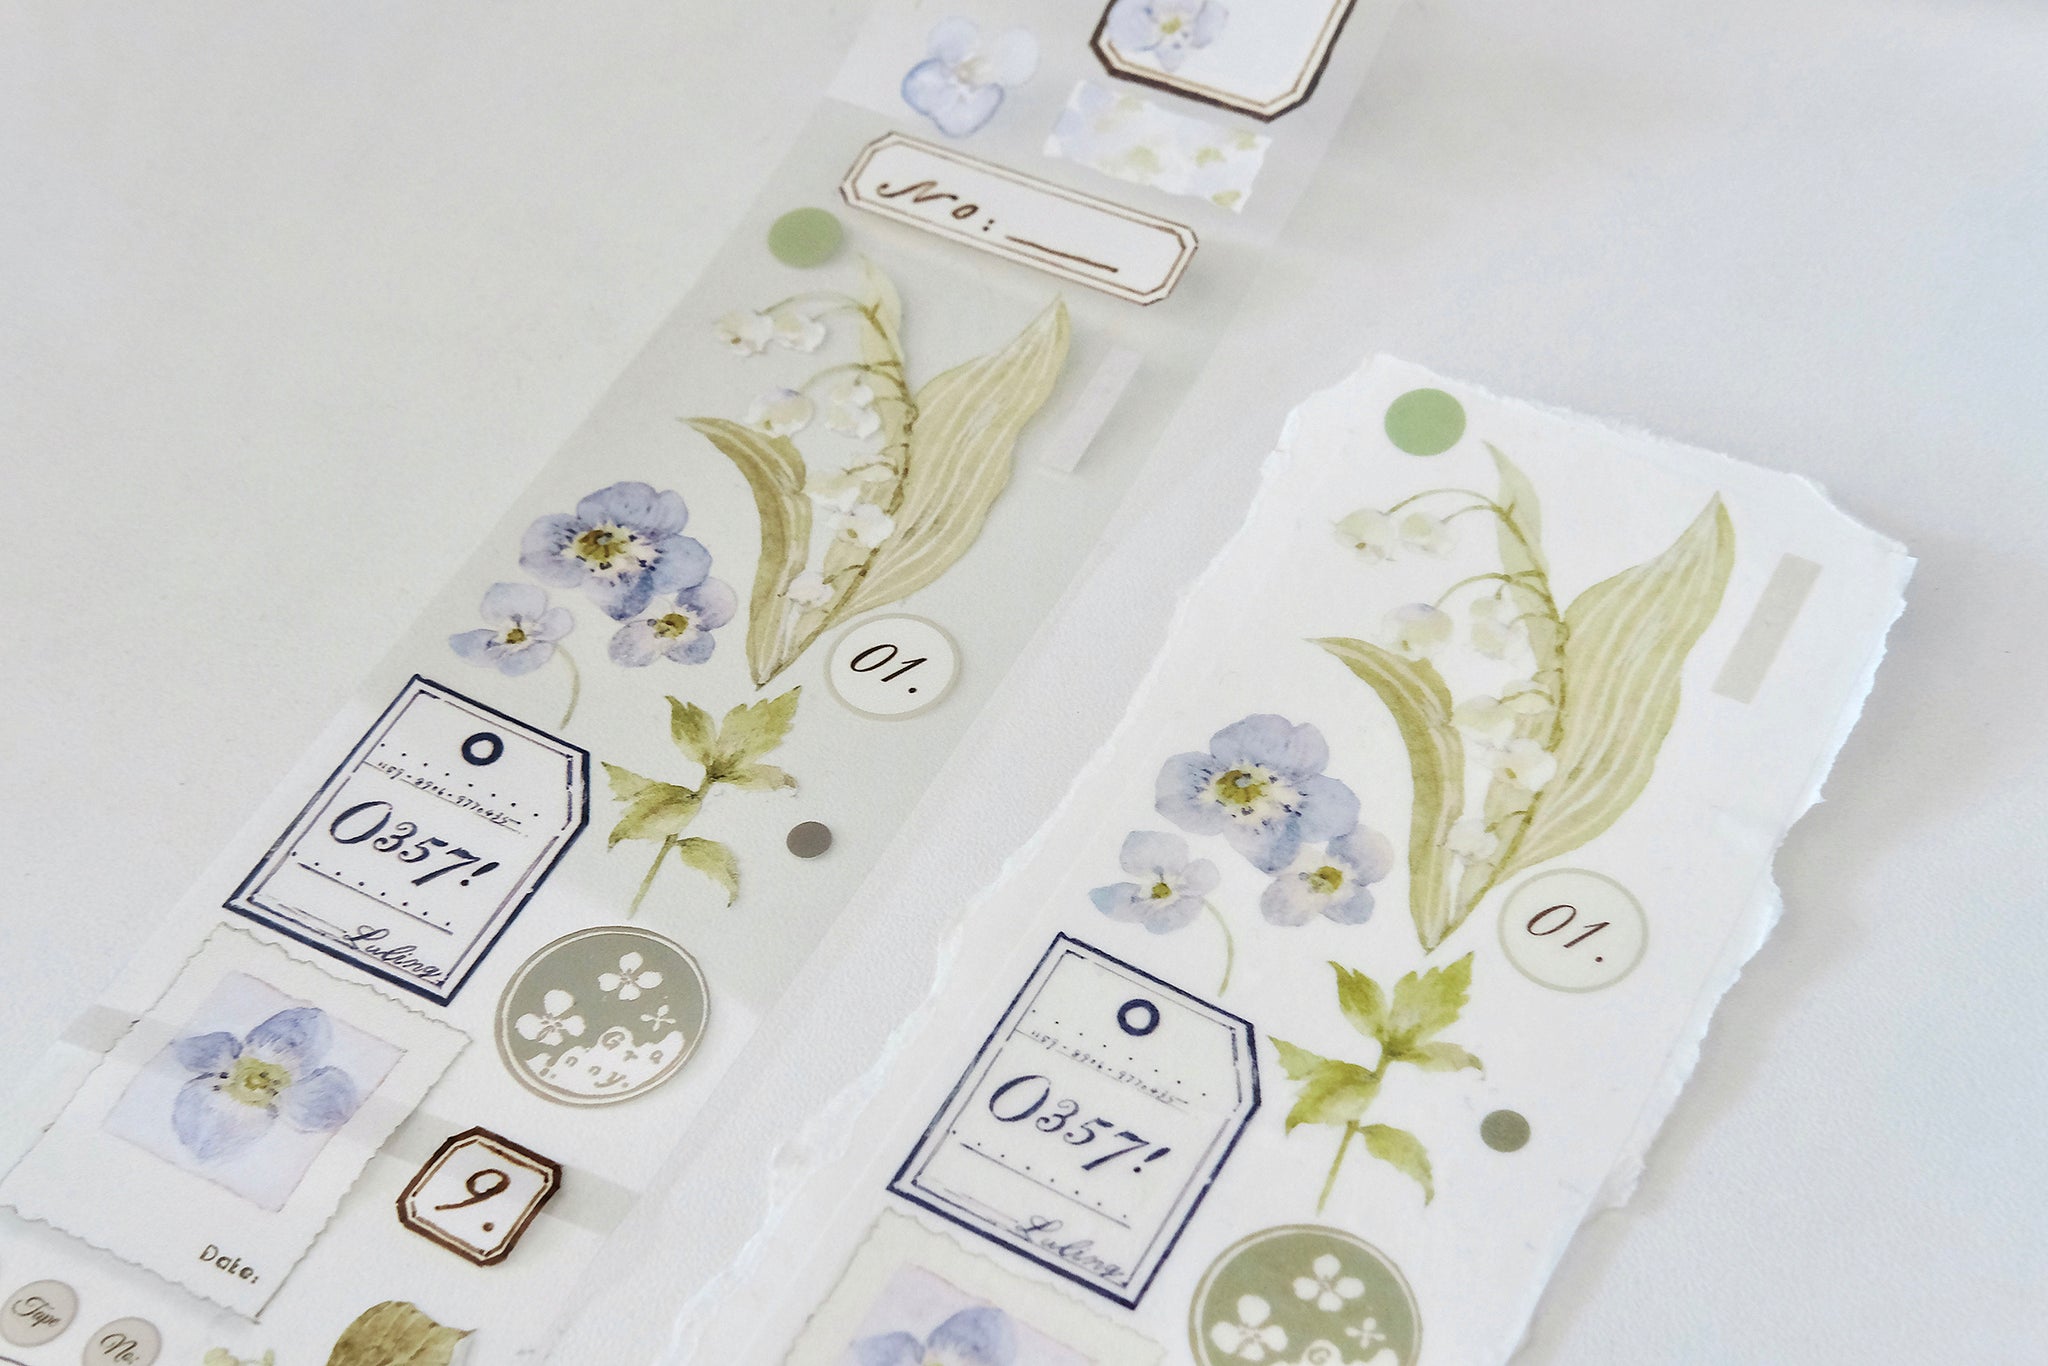 Freckles Tea Tape Sample: Bell Flowers